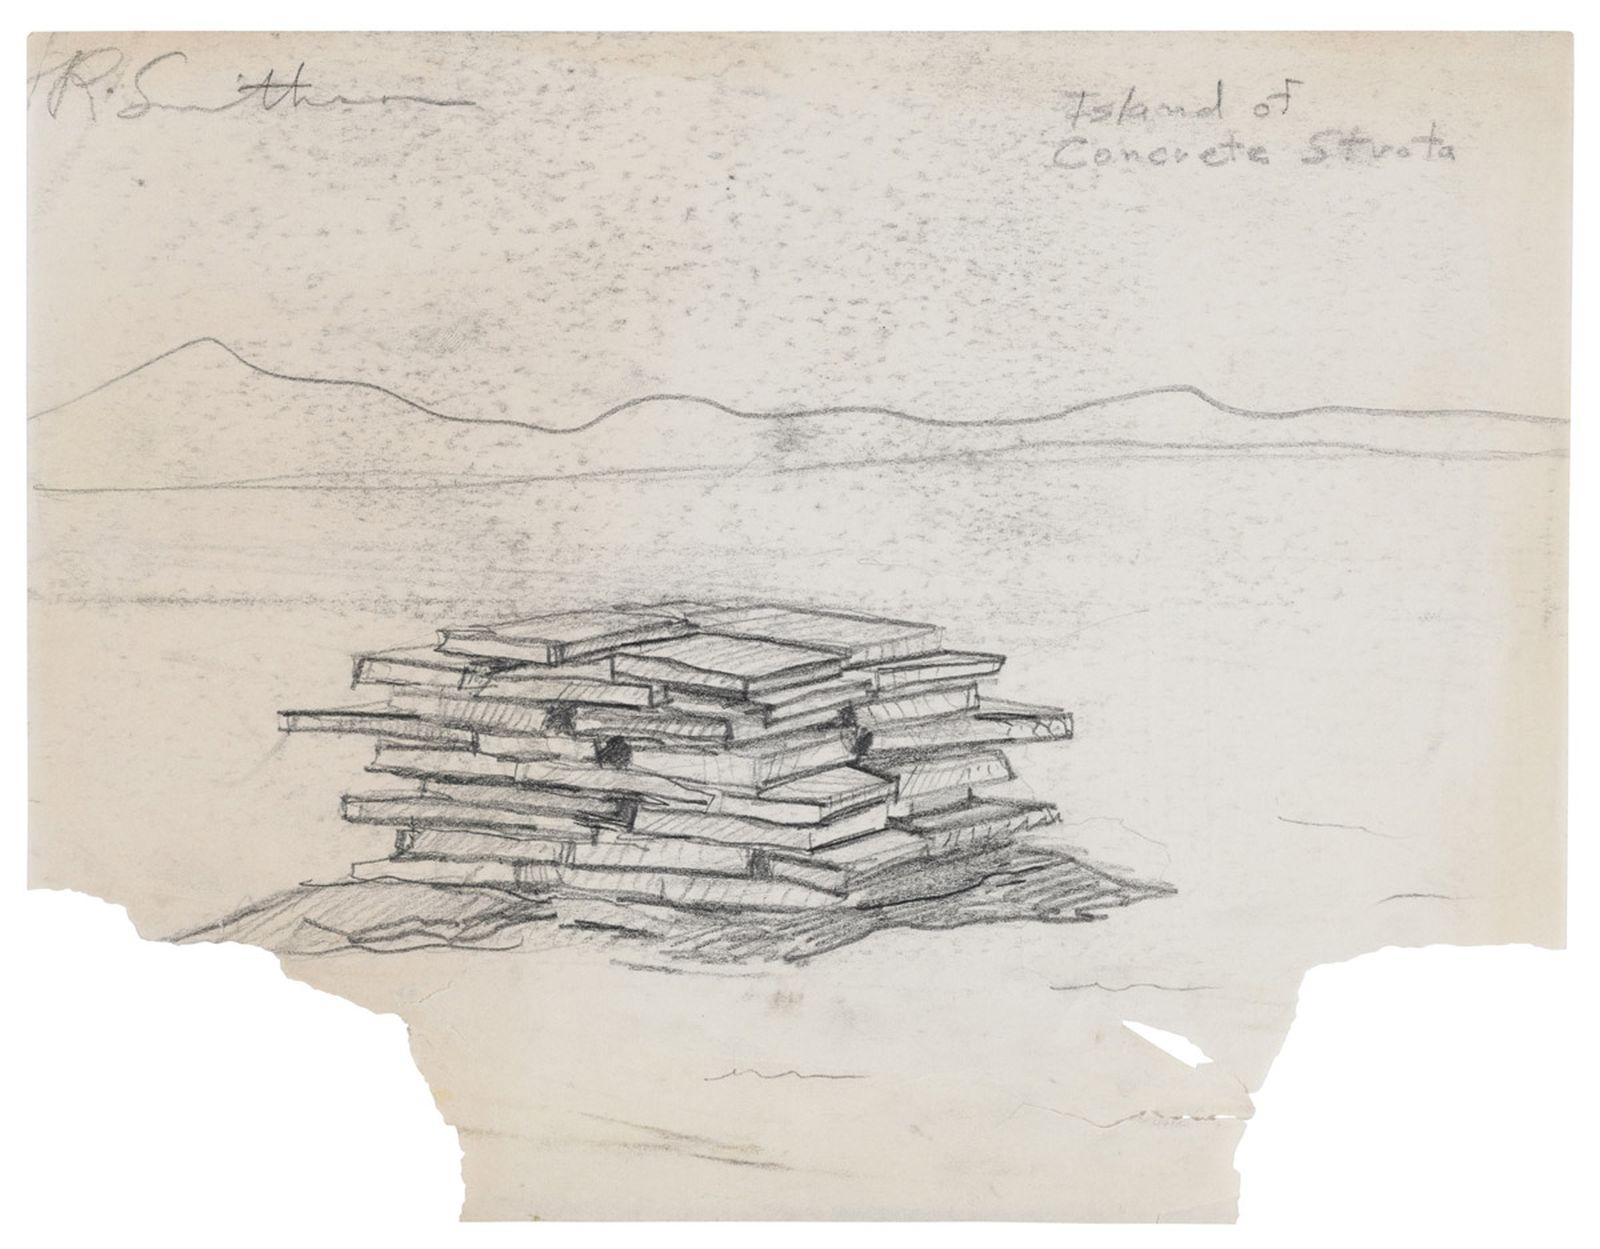 Robert Smithson, Island of Concrete Strata, n.d.